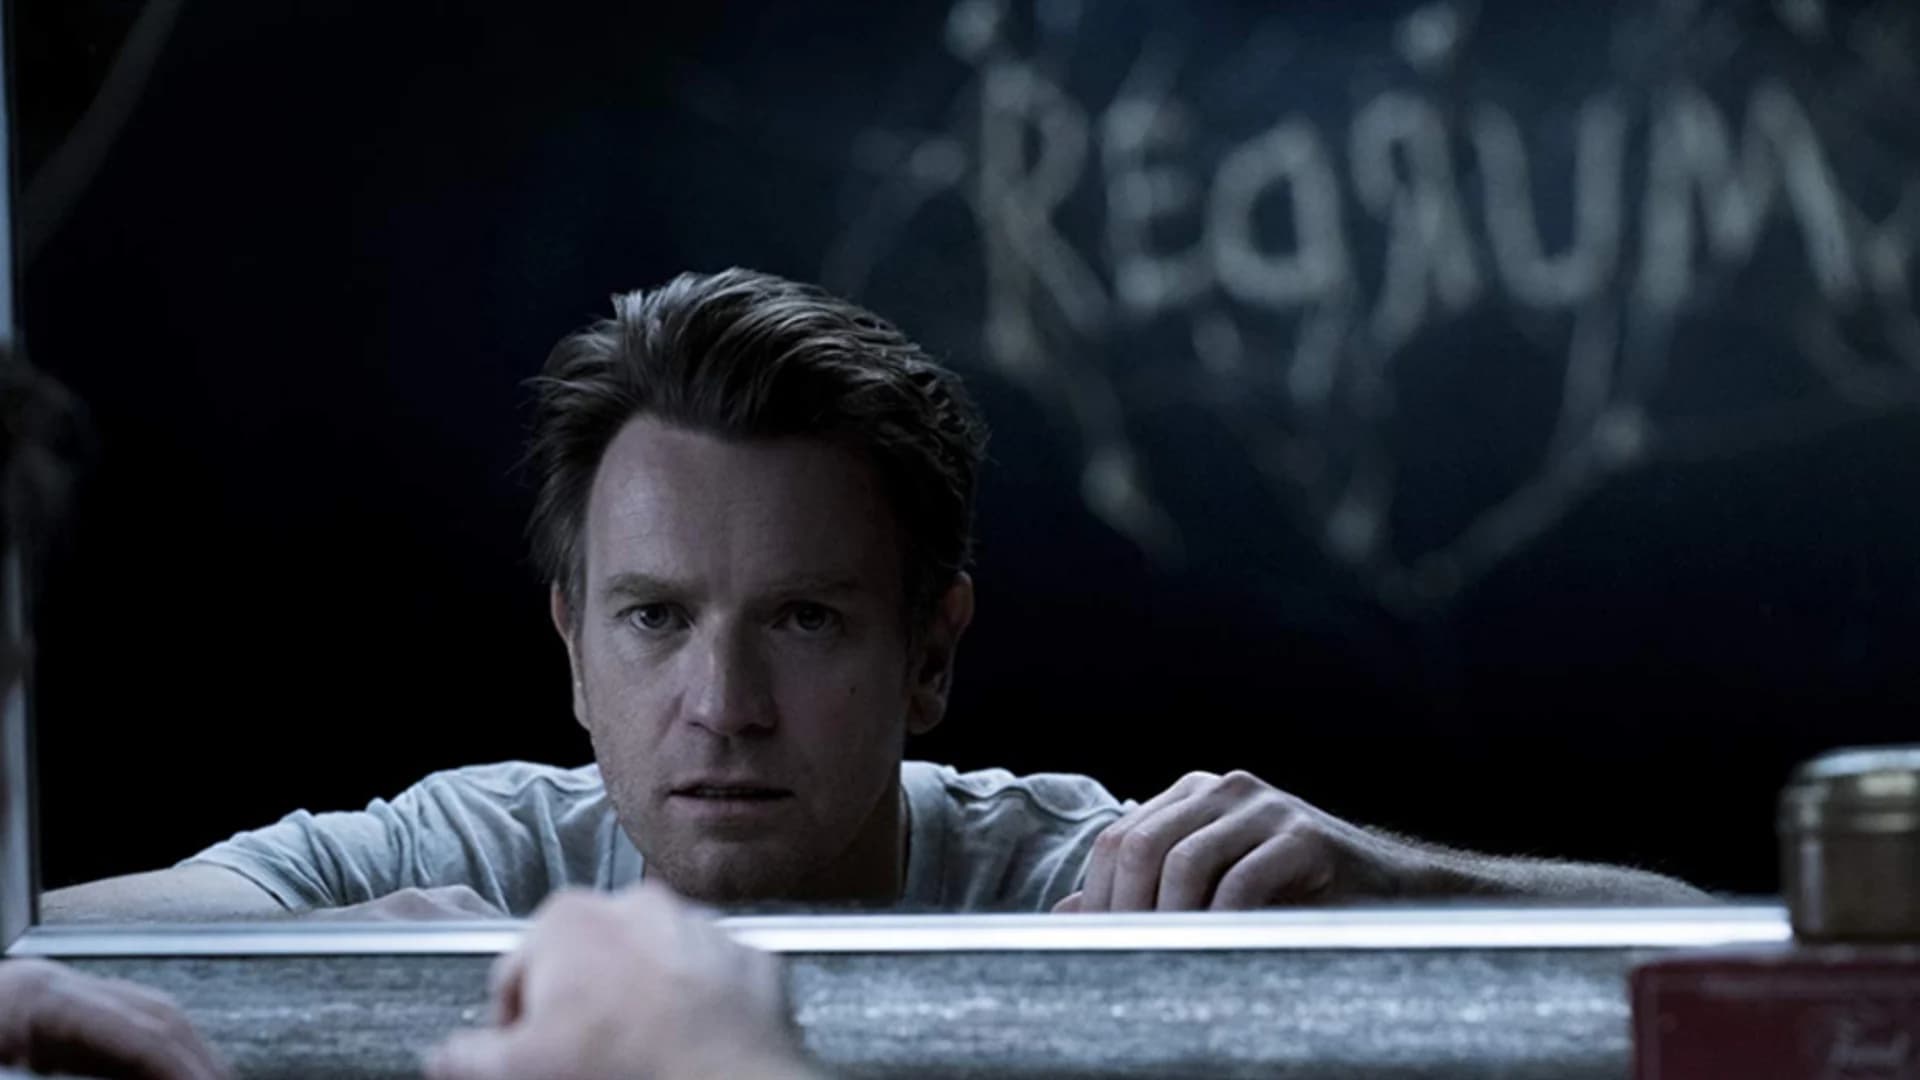 Return of Redrum: Warner drops trailer for 'Shining' sequel